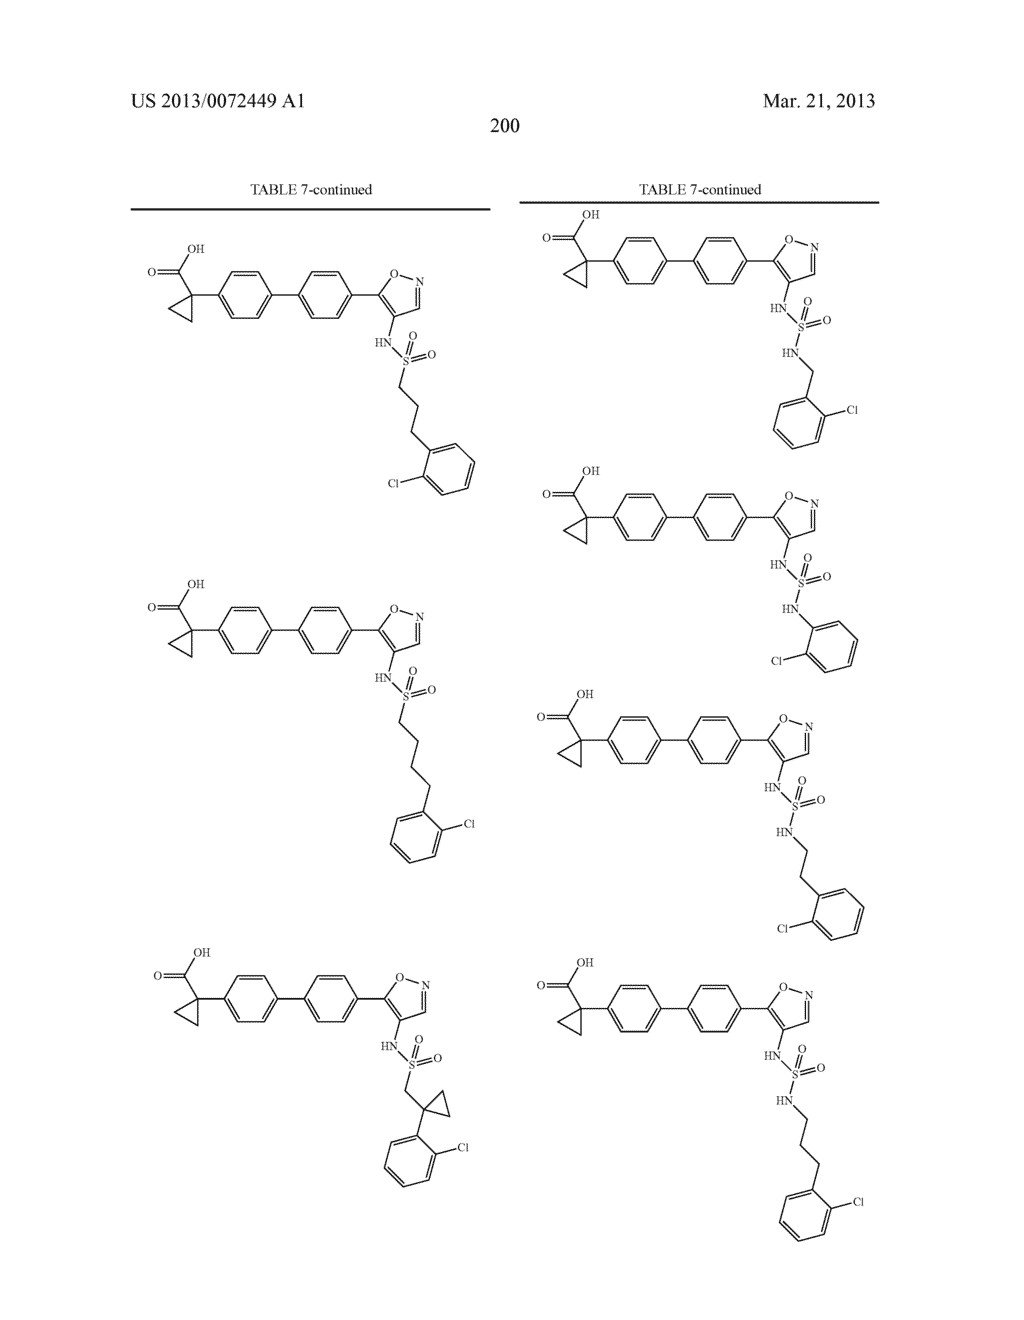 LYSOPHOSPHATIDIC ACID RECEPTOR ANTAGONISTS - diagram, schematic, and image 201